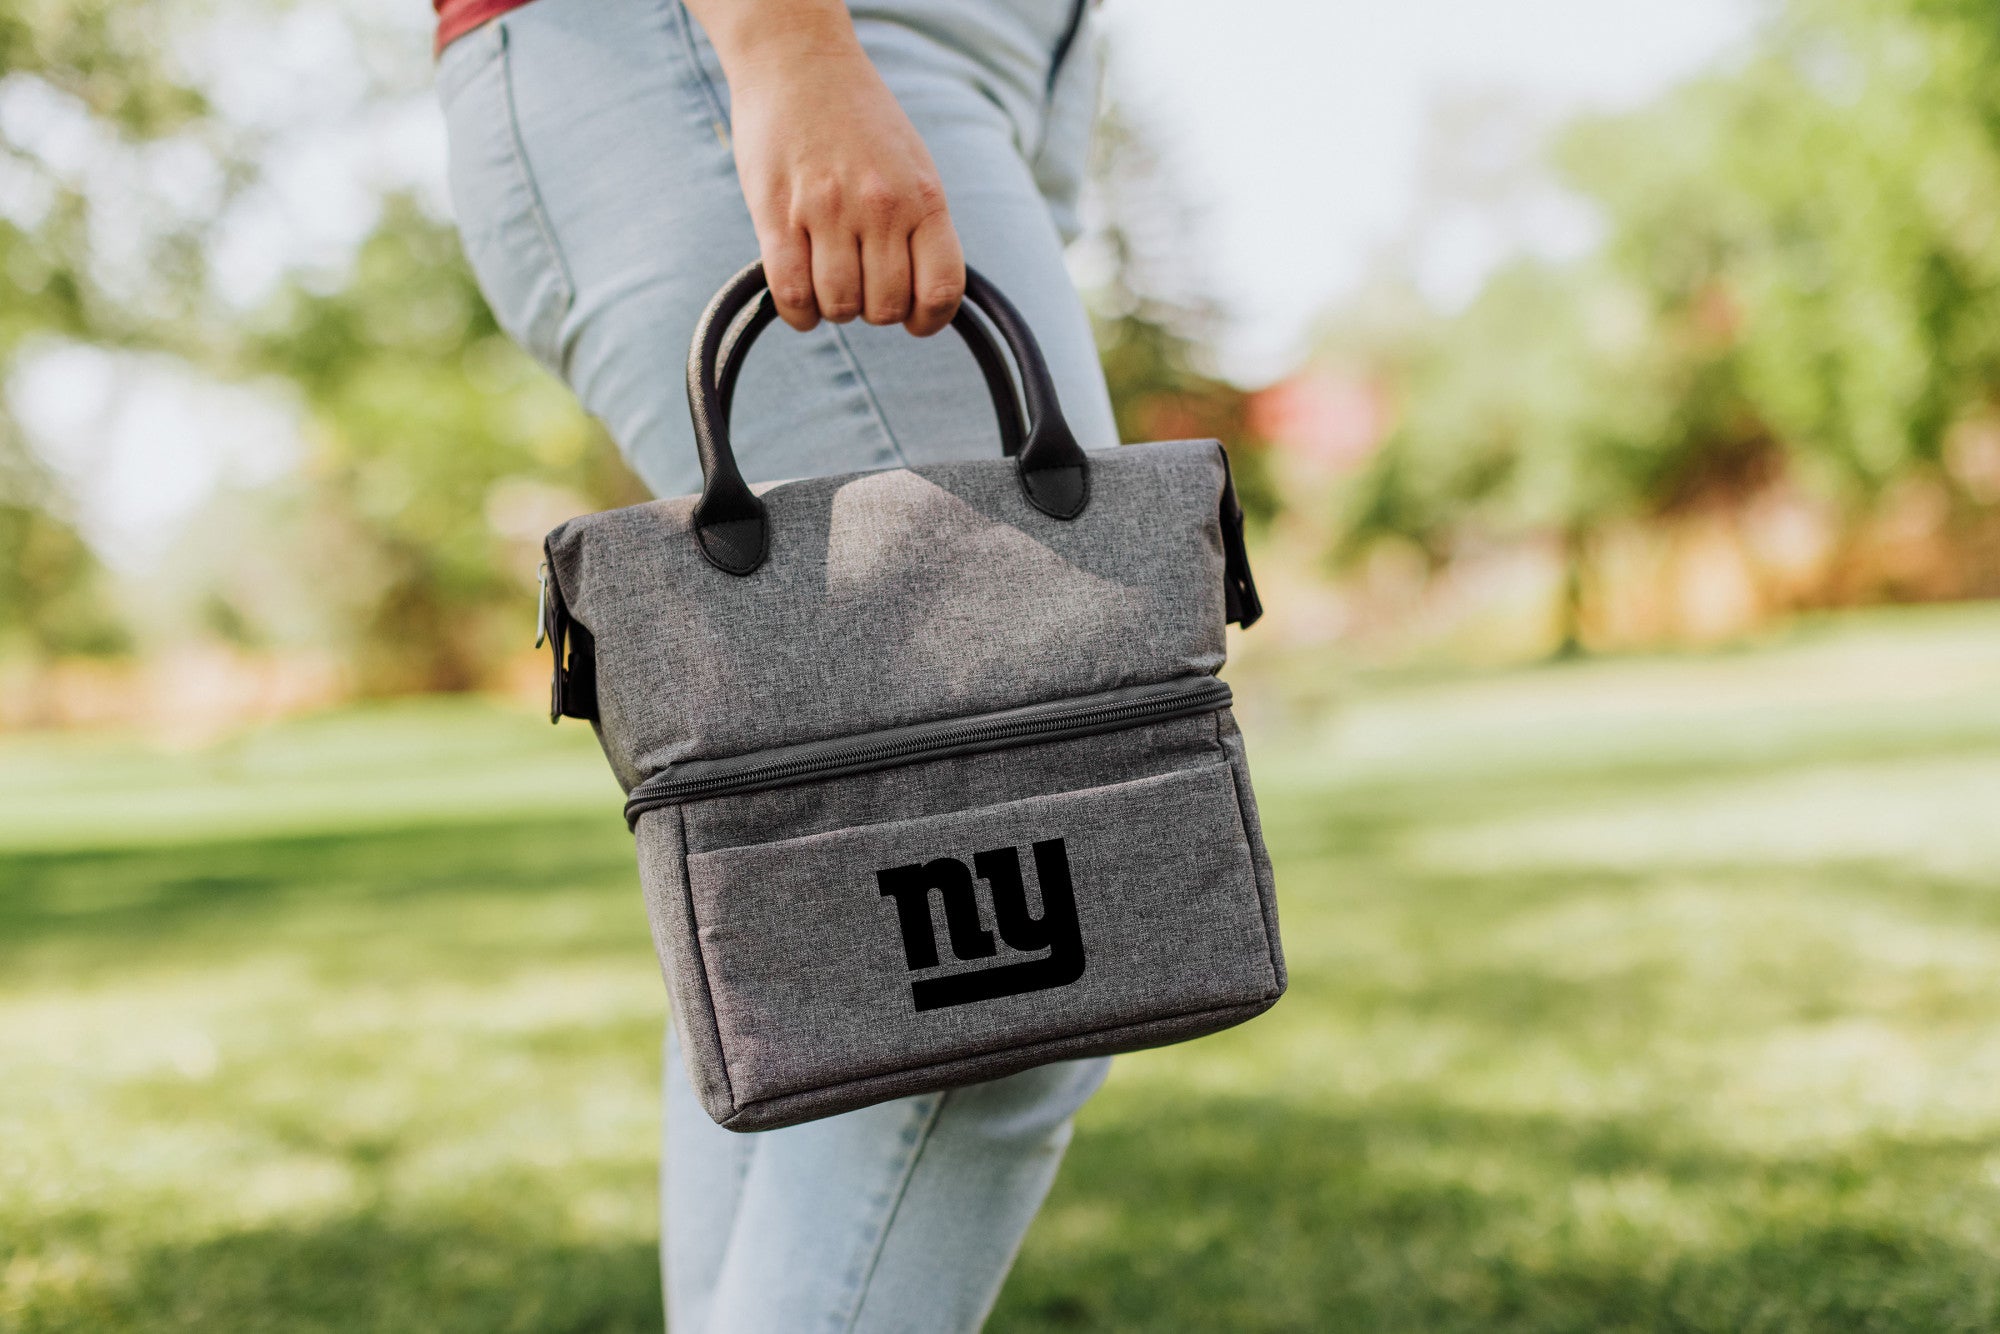 New York Giants - Urban Lunch Bag Cooler